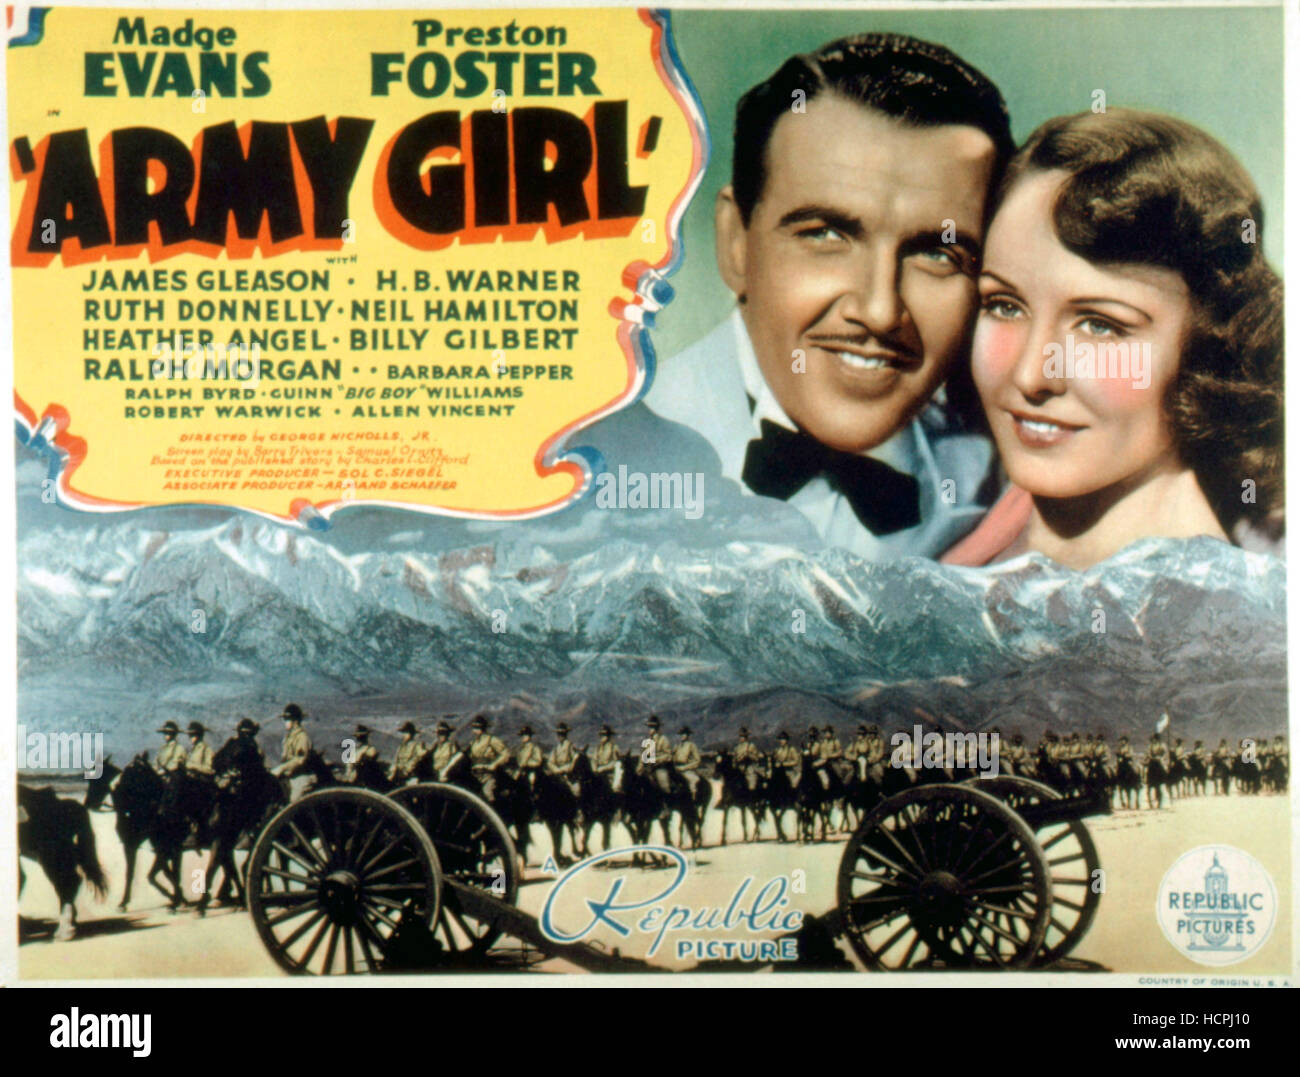 ARMY GIRL, Preston Foster, Madge Evans, 1938 Stock Photo